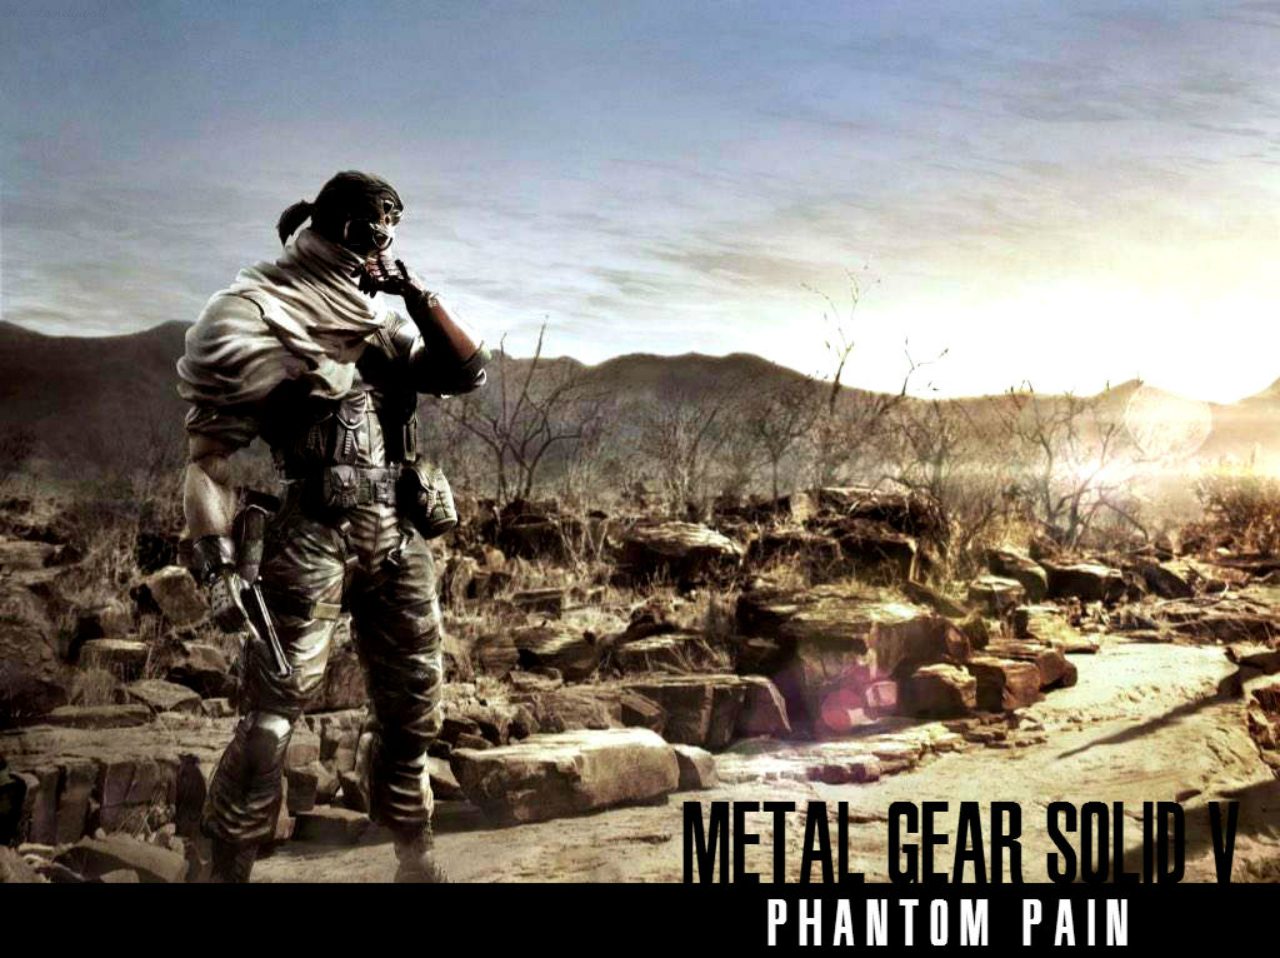 metal gear solid v: the phantom pain, video game, big boss (metal gear solid), metal gear solid, solid snake